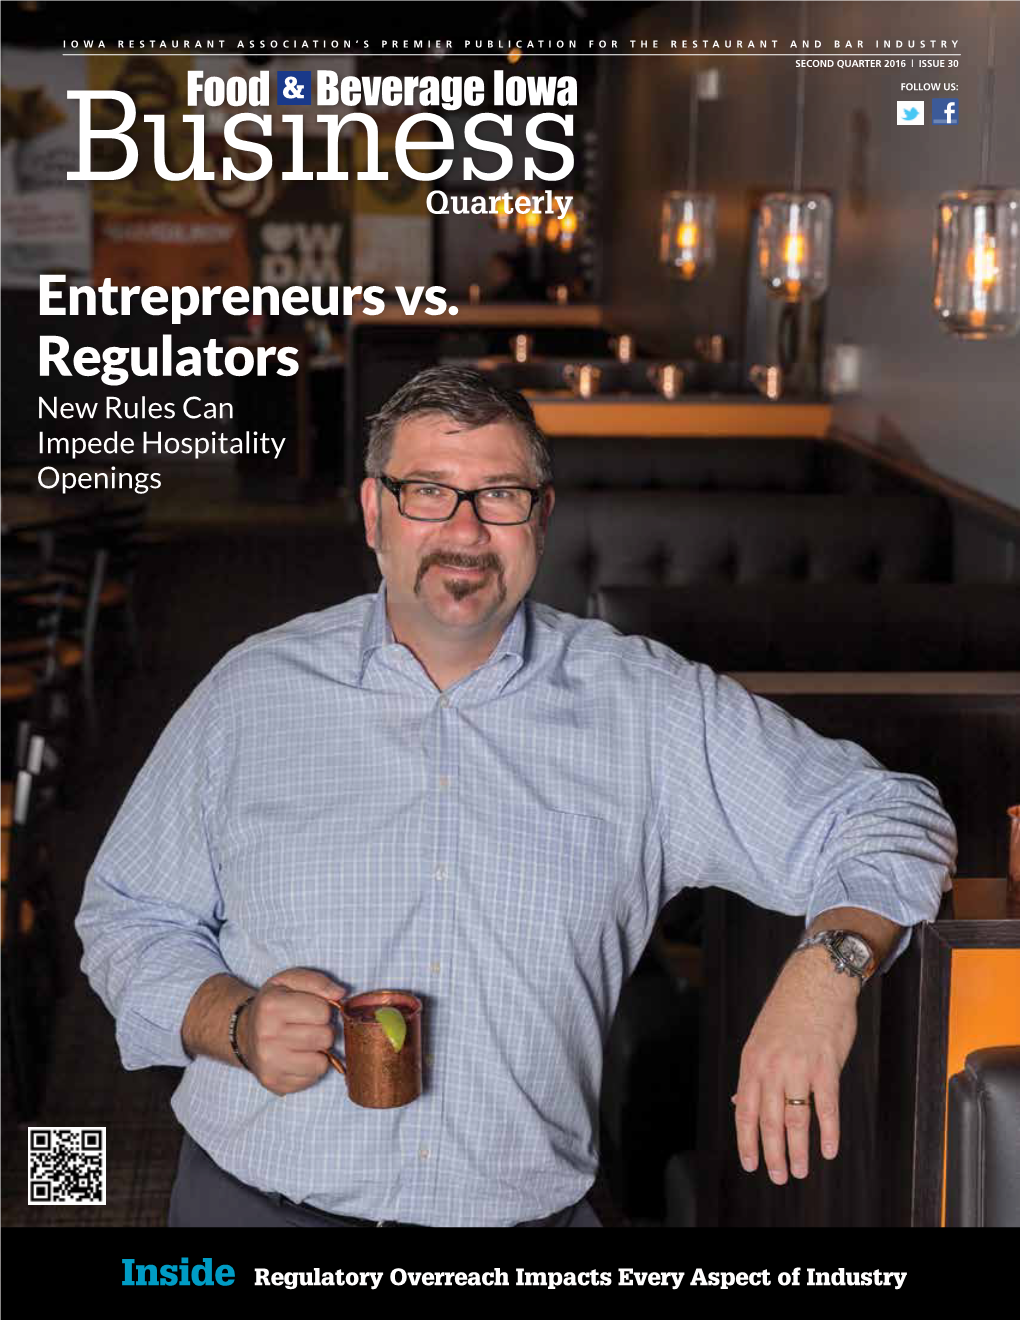 Entrepreneurs Vs. Regulators New Rules Can Impede Hospitality Openings